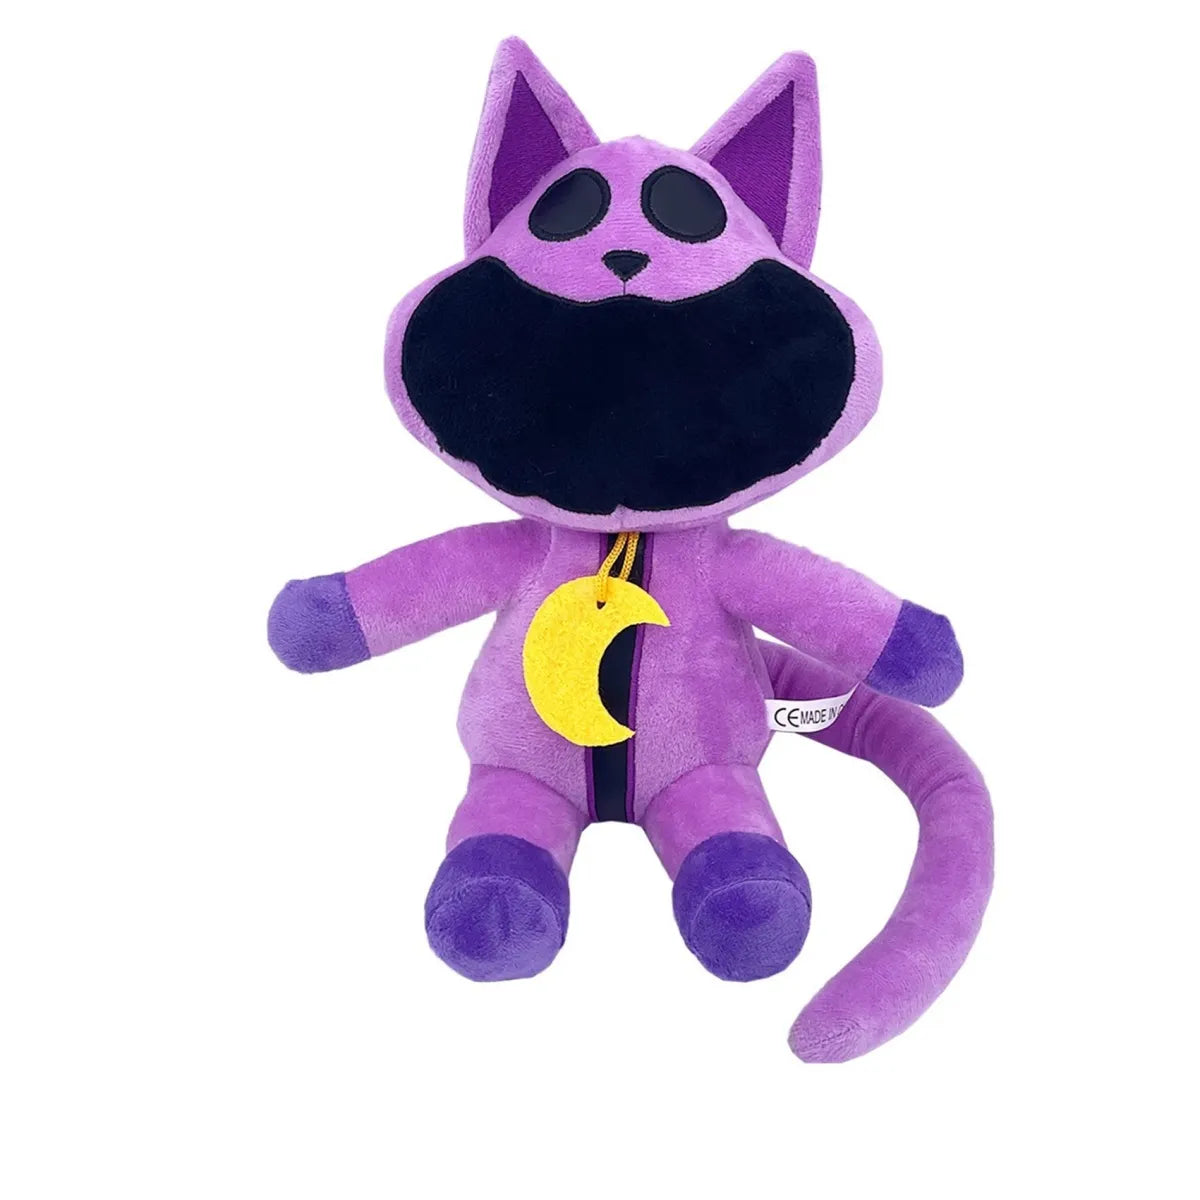 12 Inch Smiling Critters Plush Toys, Catnap Stuffed Animal Plush